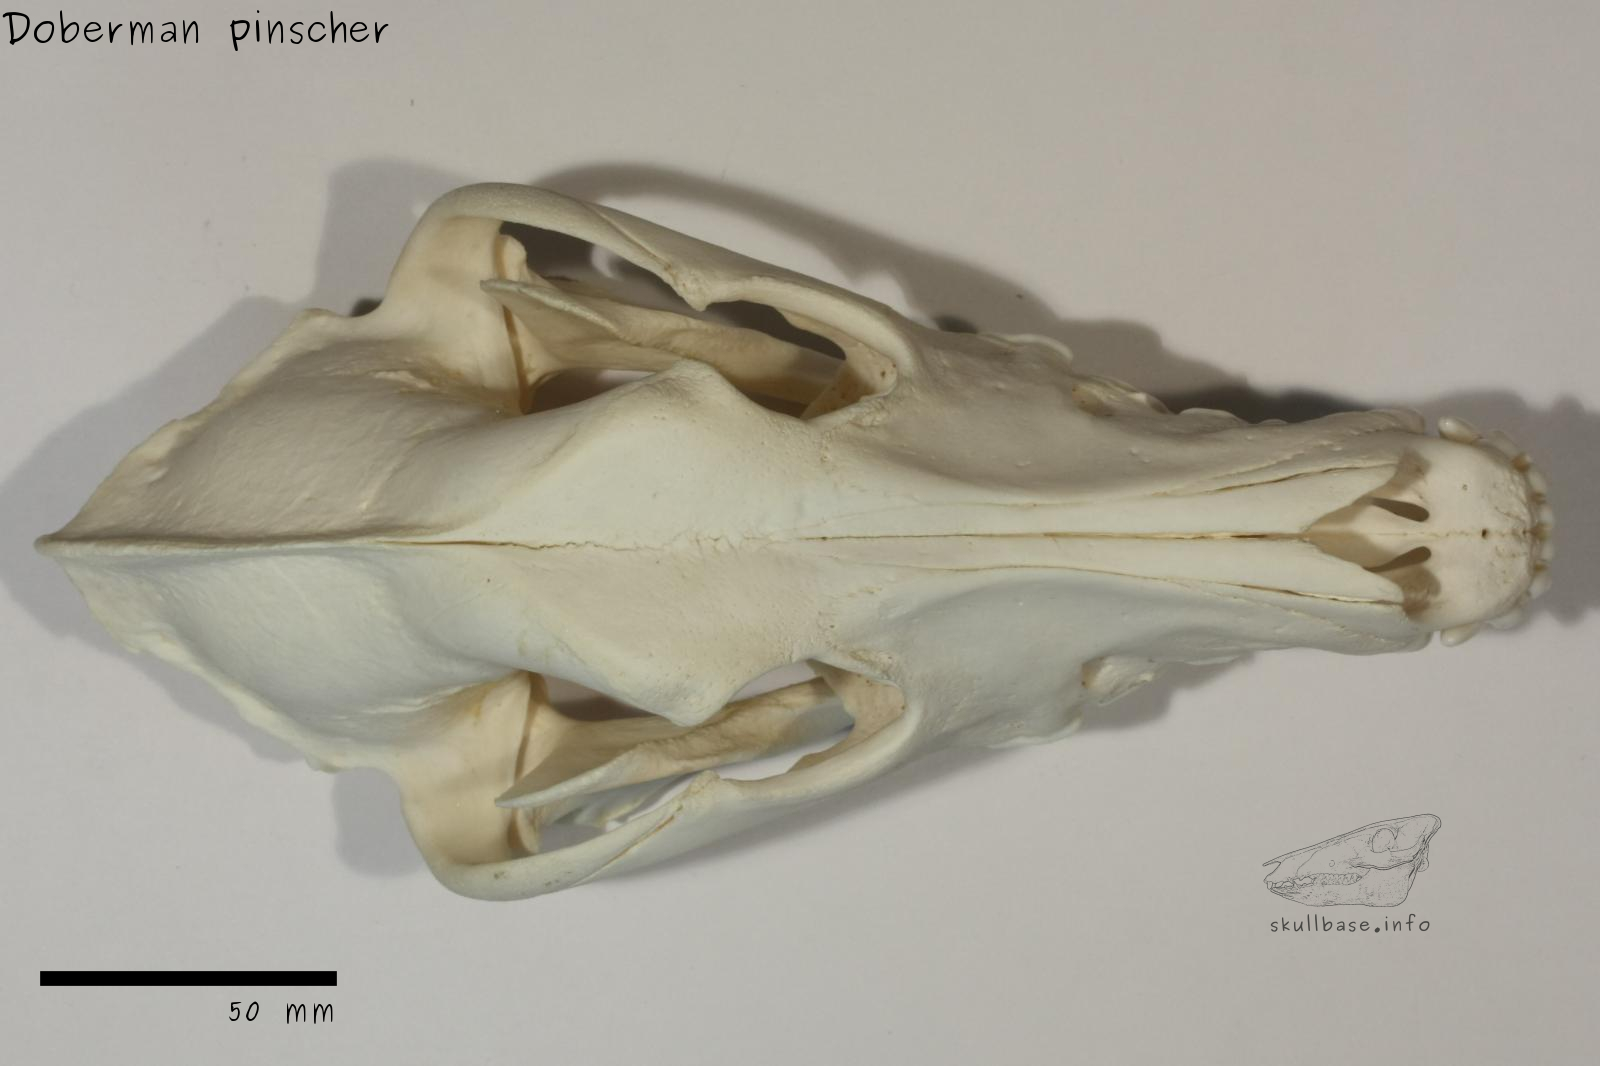 Doberman pinscher (Canis lupus familiaris) skull dorsal view